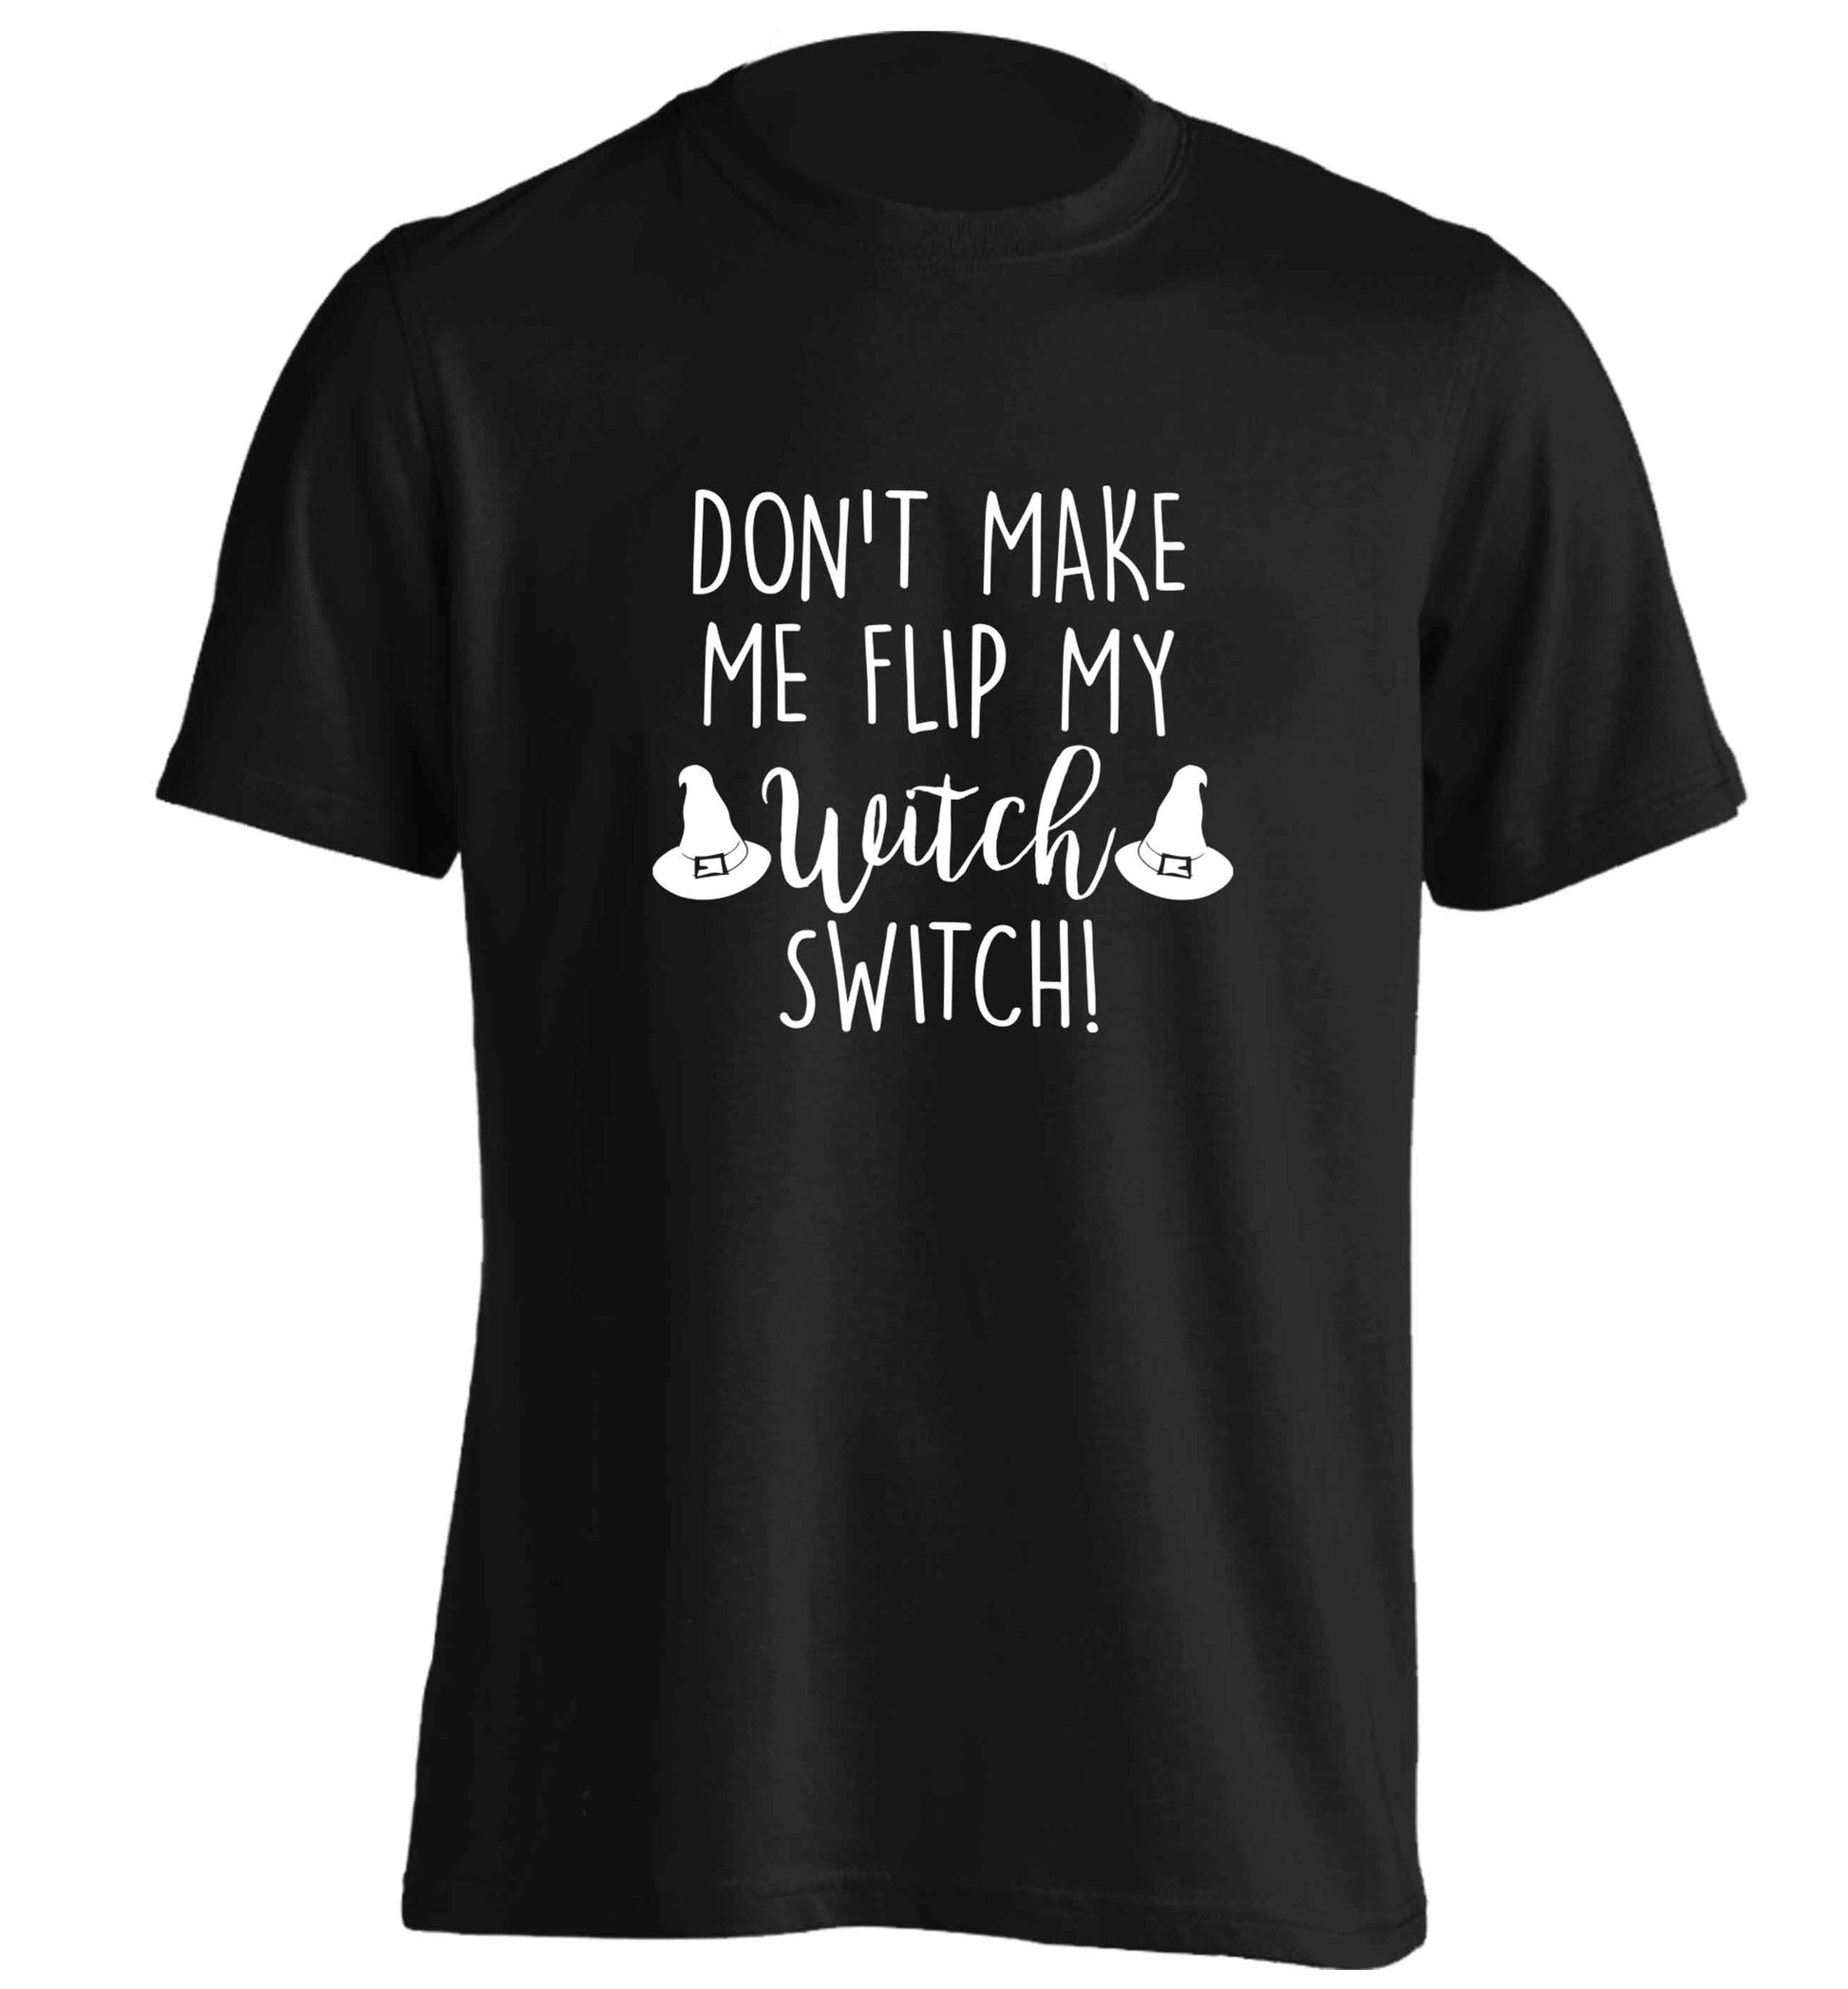 Don't make me flip my witch switch adults unisex black Tshirt 2XL